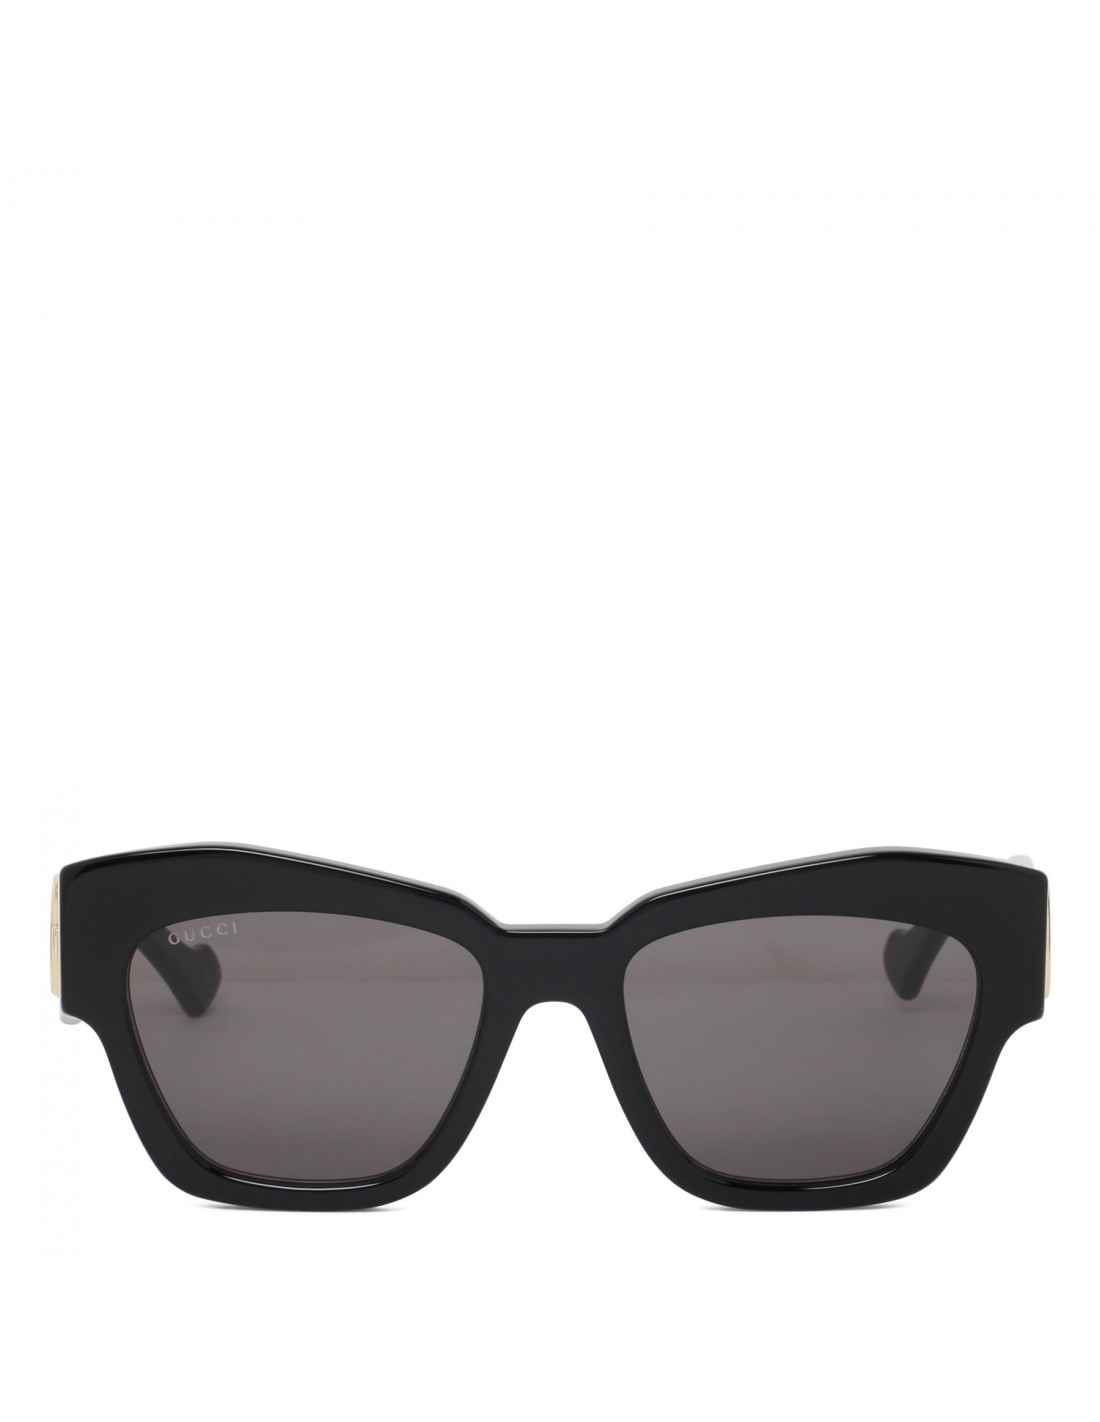 Cat-eye black sunglasses